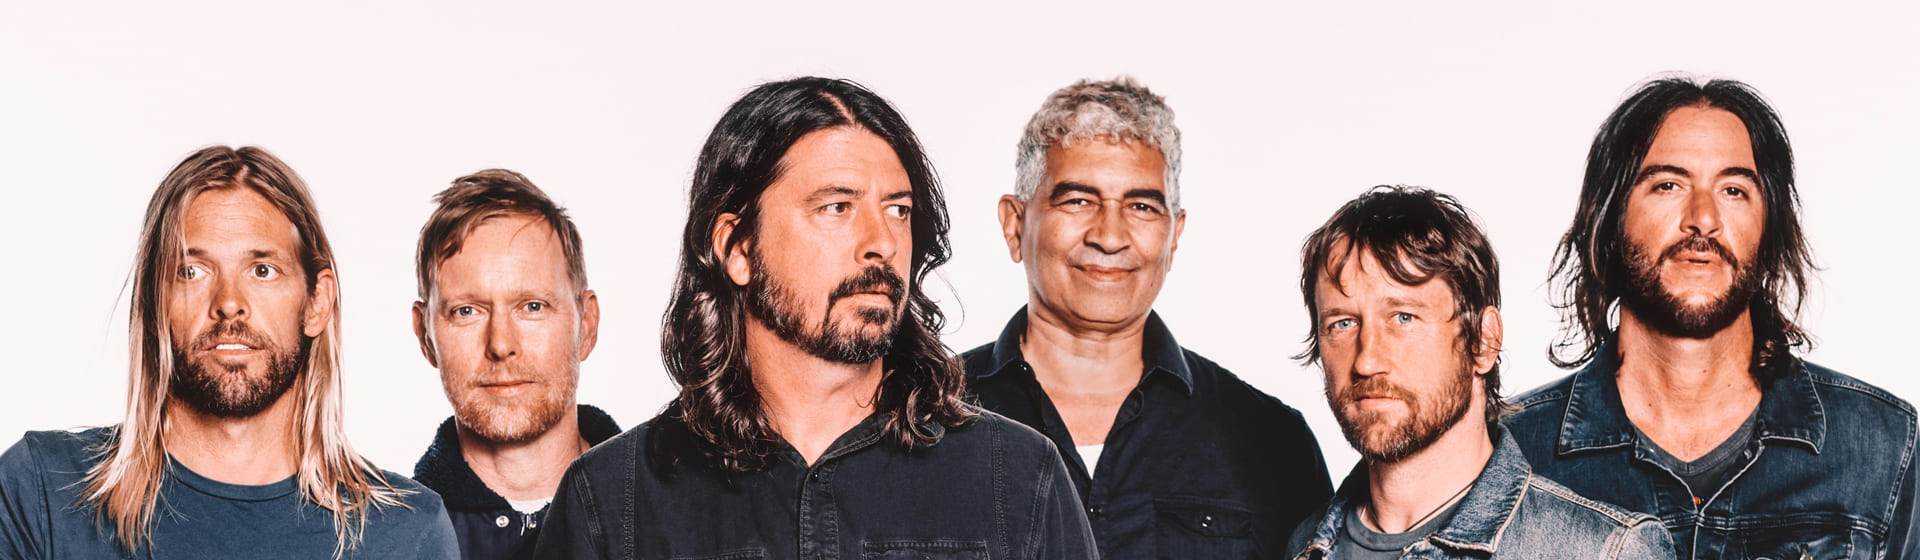 Foo Fighters - Мерч и одежда с атрибутикой